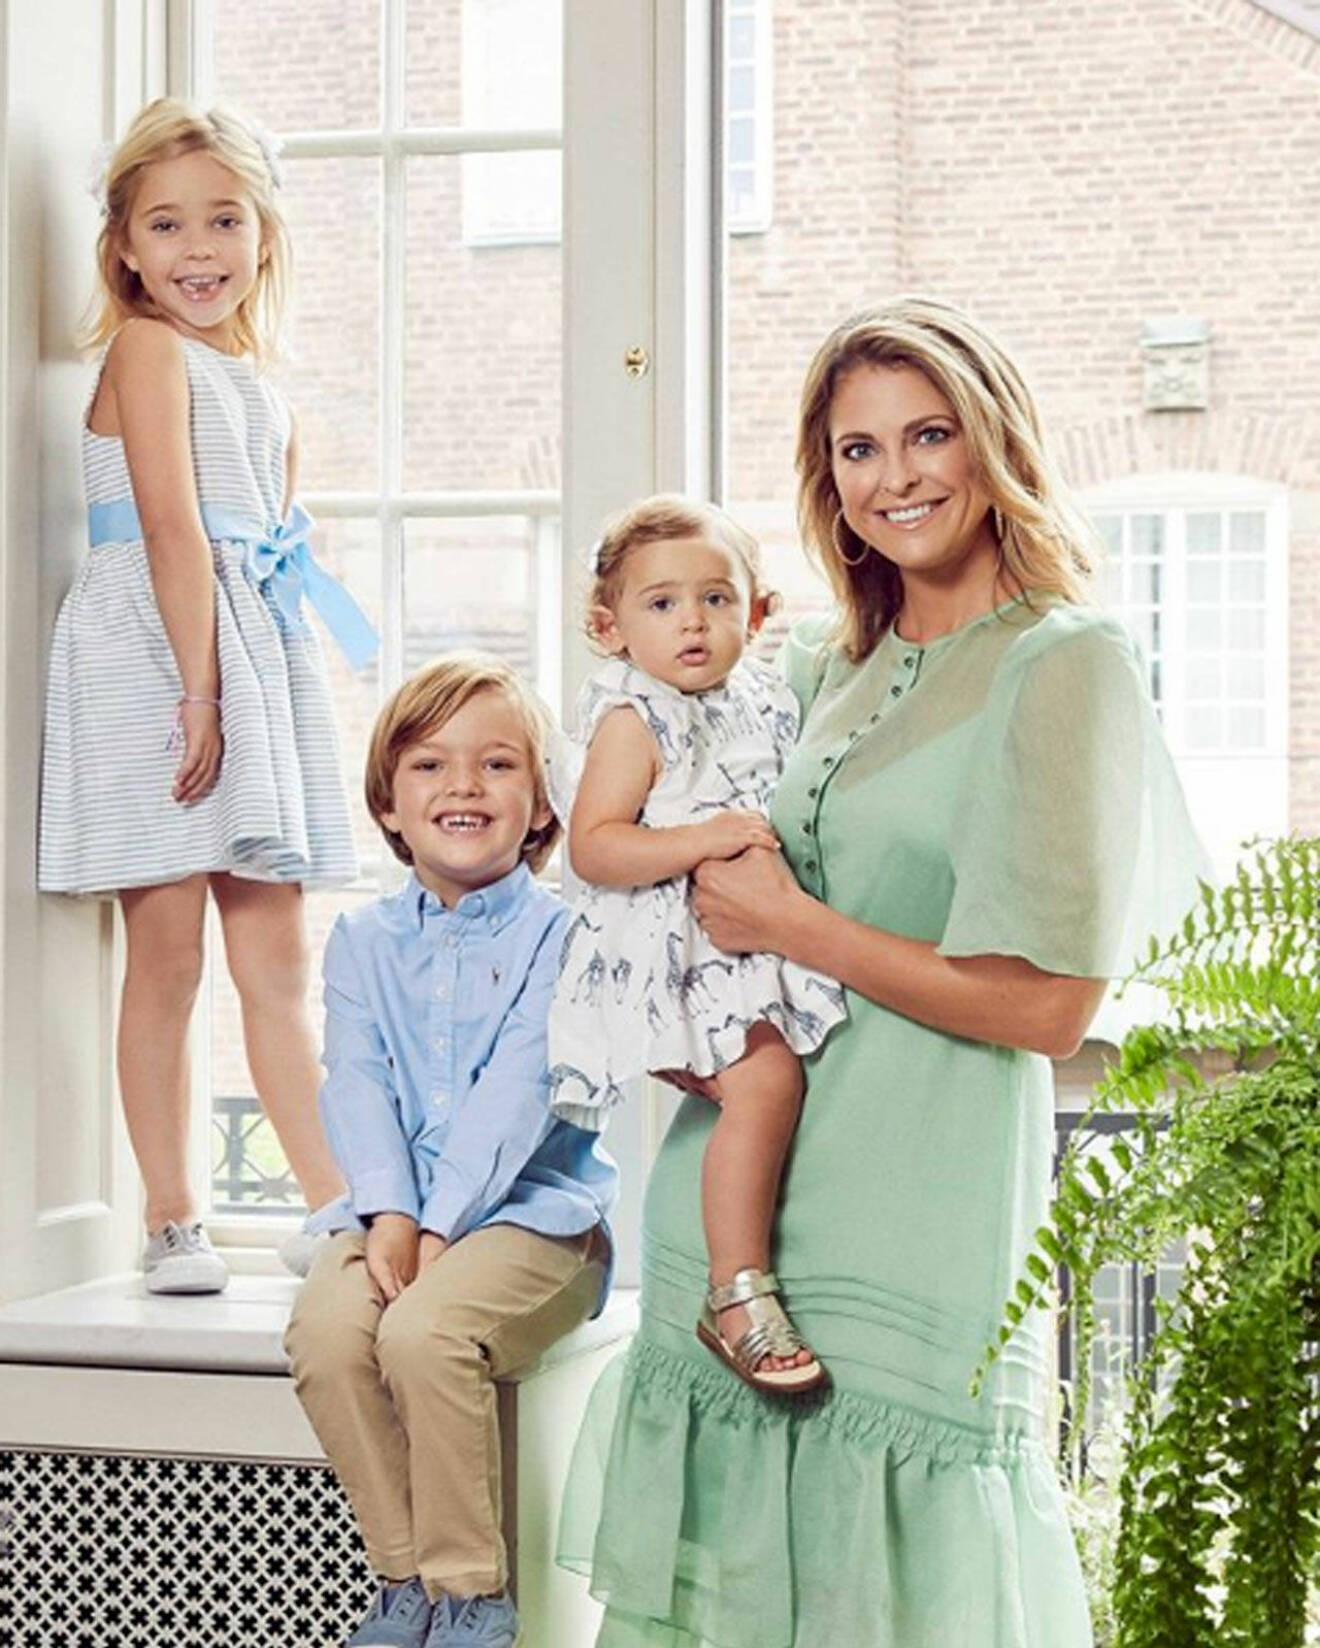 Prinsessan Madeleine med barnen prinsessan Leonore, prins Nicolas och prinsessan Adrienne.